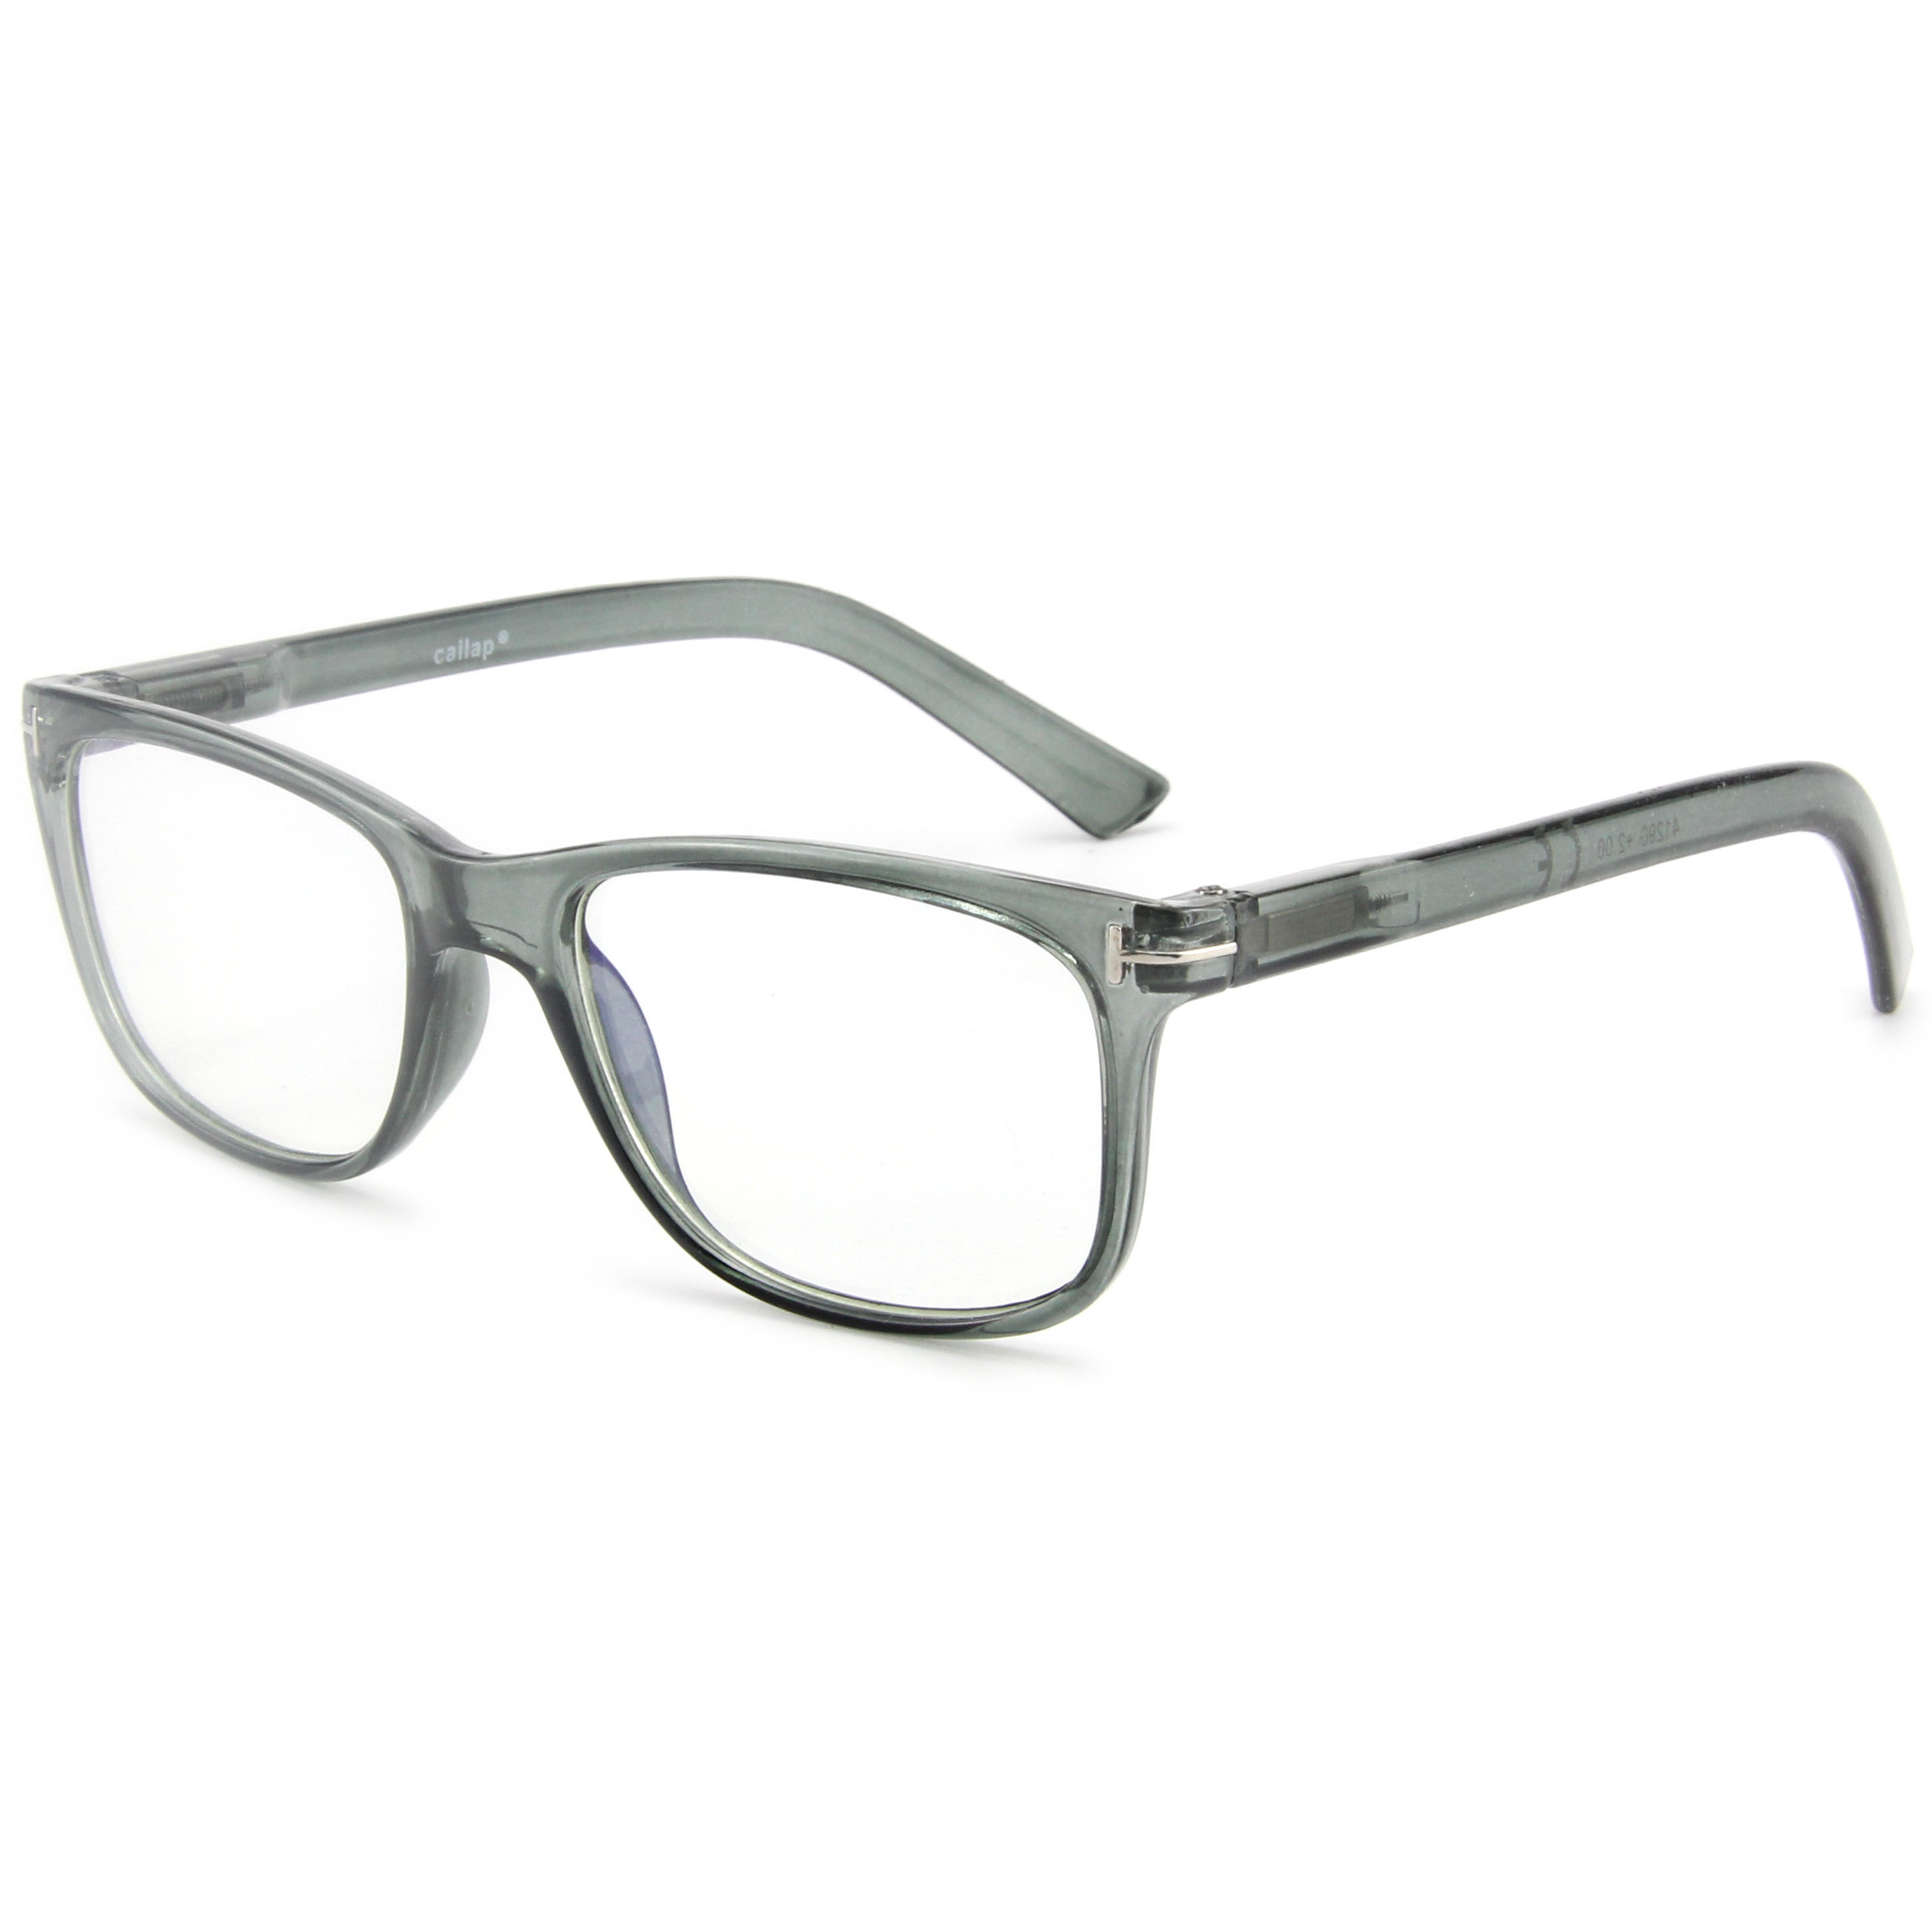 EUGENIA Optical Frames Brand Name Eyeglass Frames Blue Light Eyeglasses